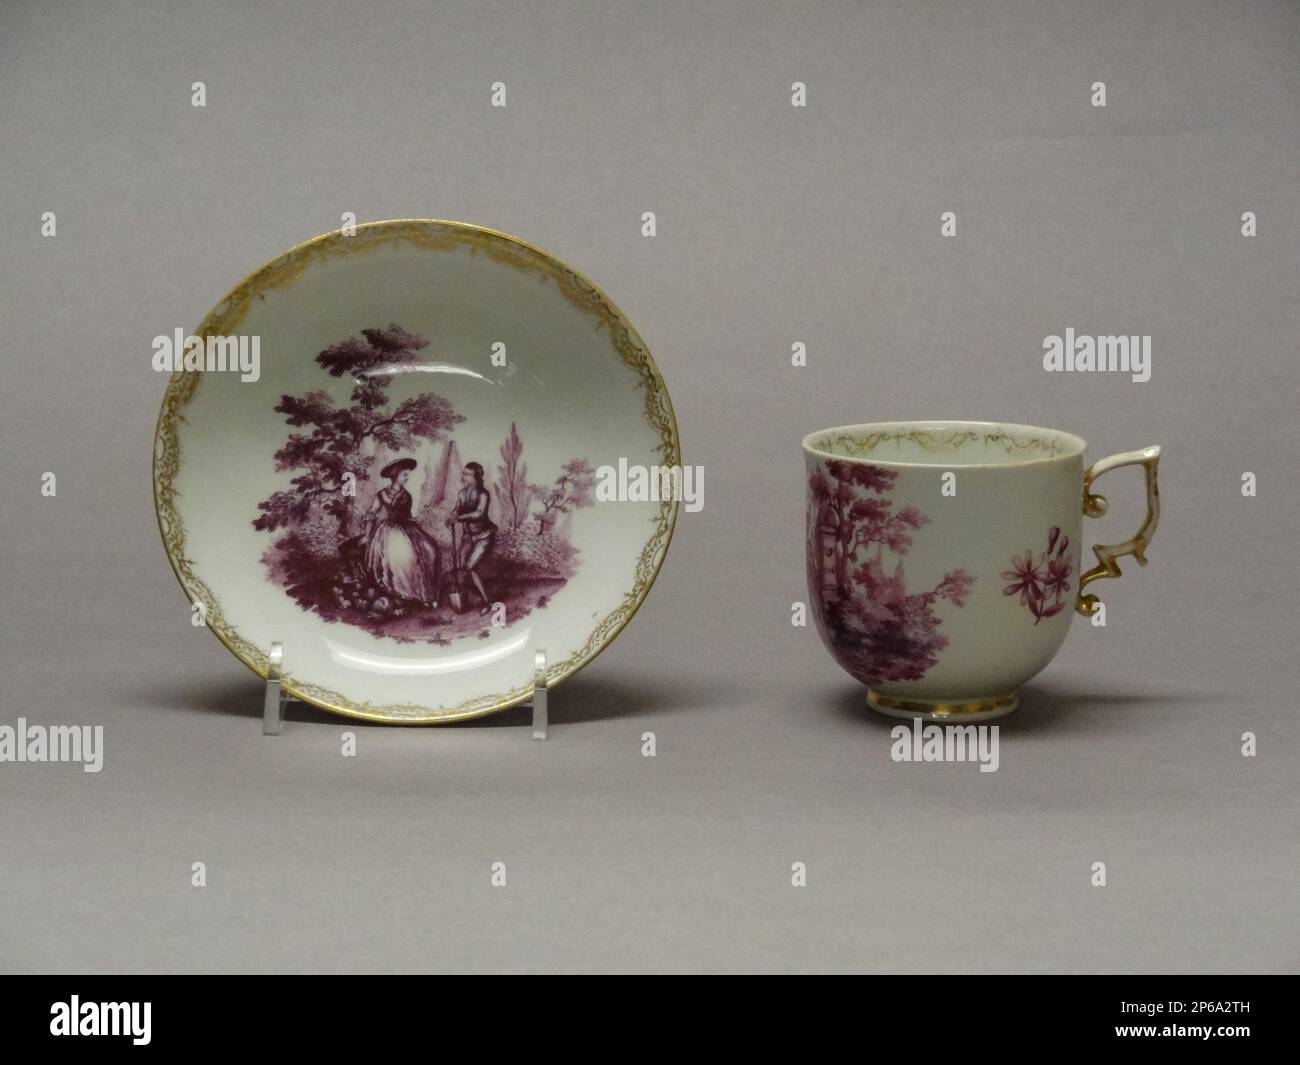 Meissen Porcelain Manufactory, Cup and Saucer, 1746, hard-paste porcelain. Stock Photo